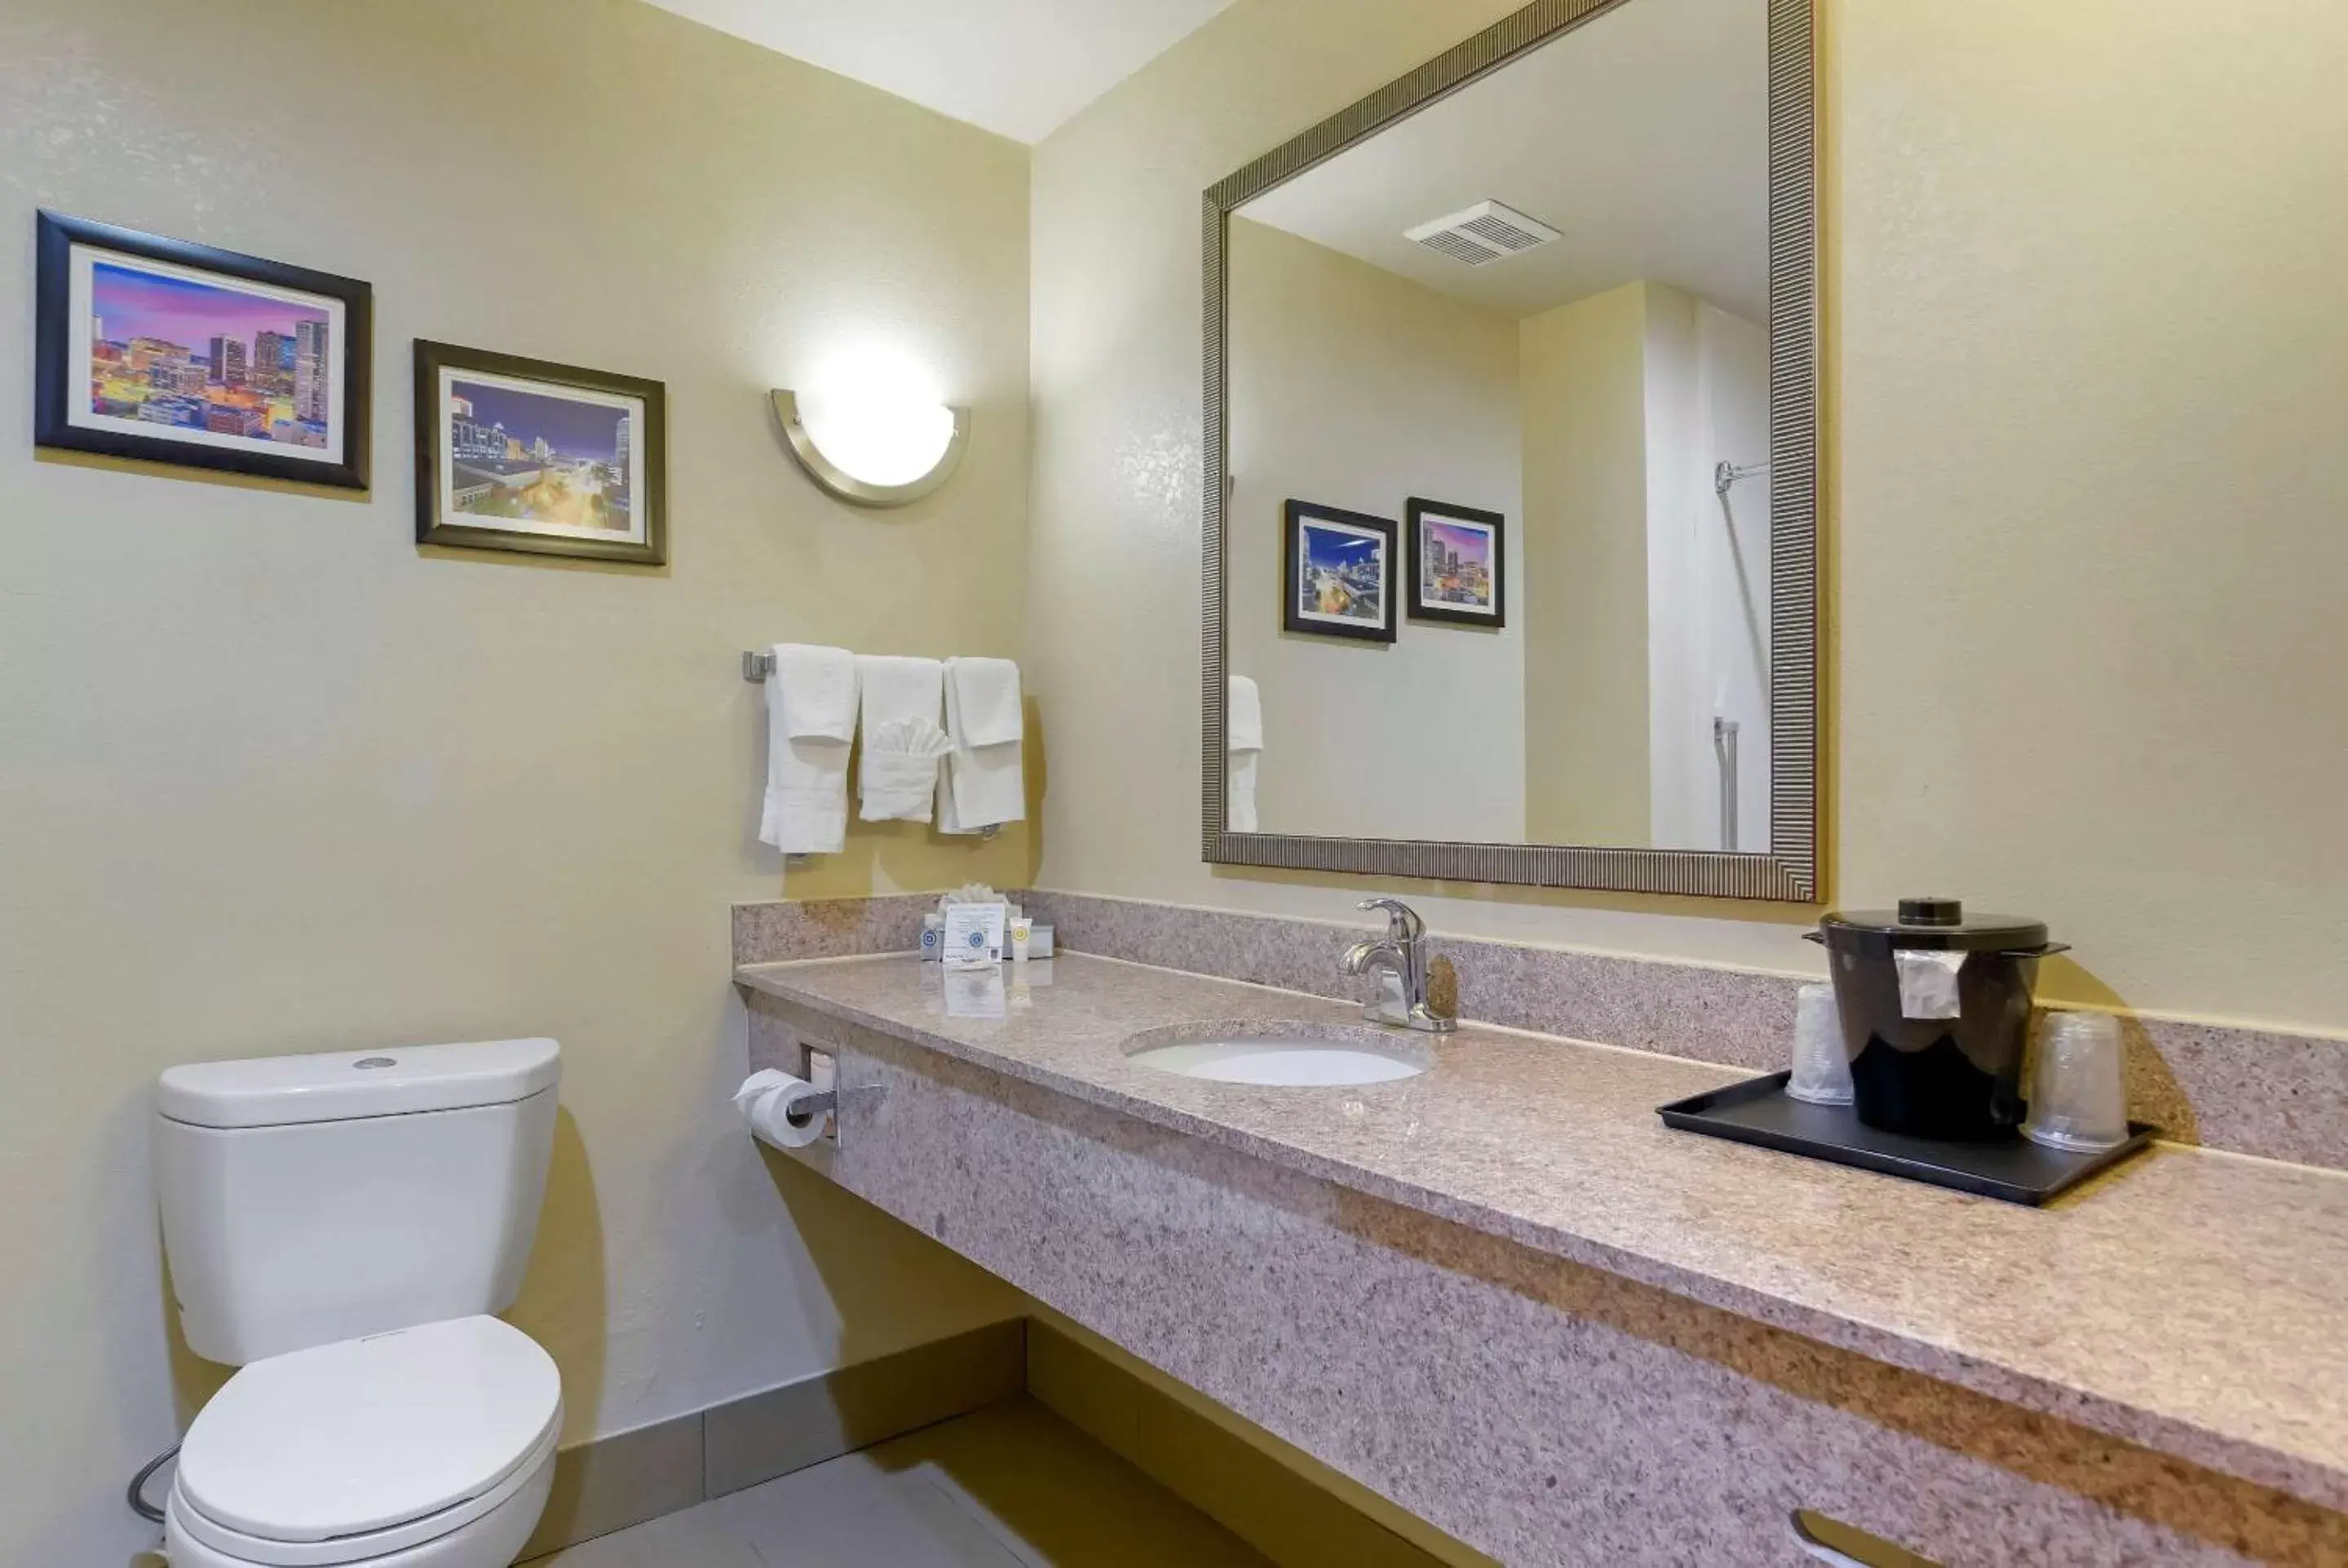 Photo of the whole room, Bathroom in Comfort Suites Fultondale I-65 near I-22